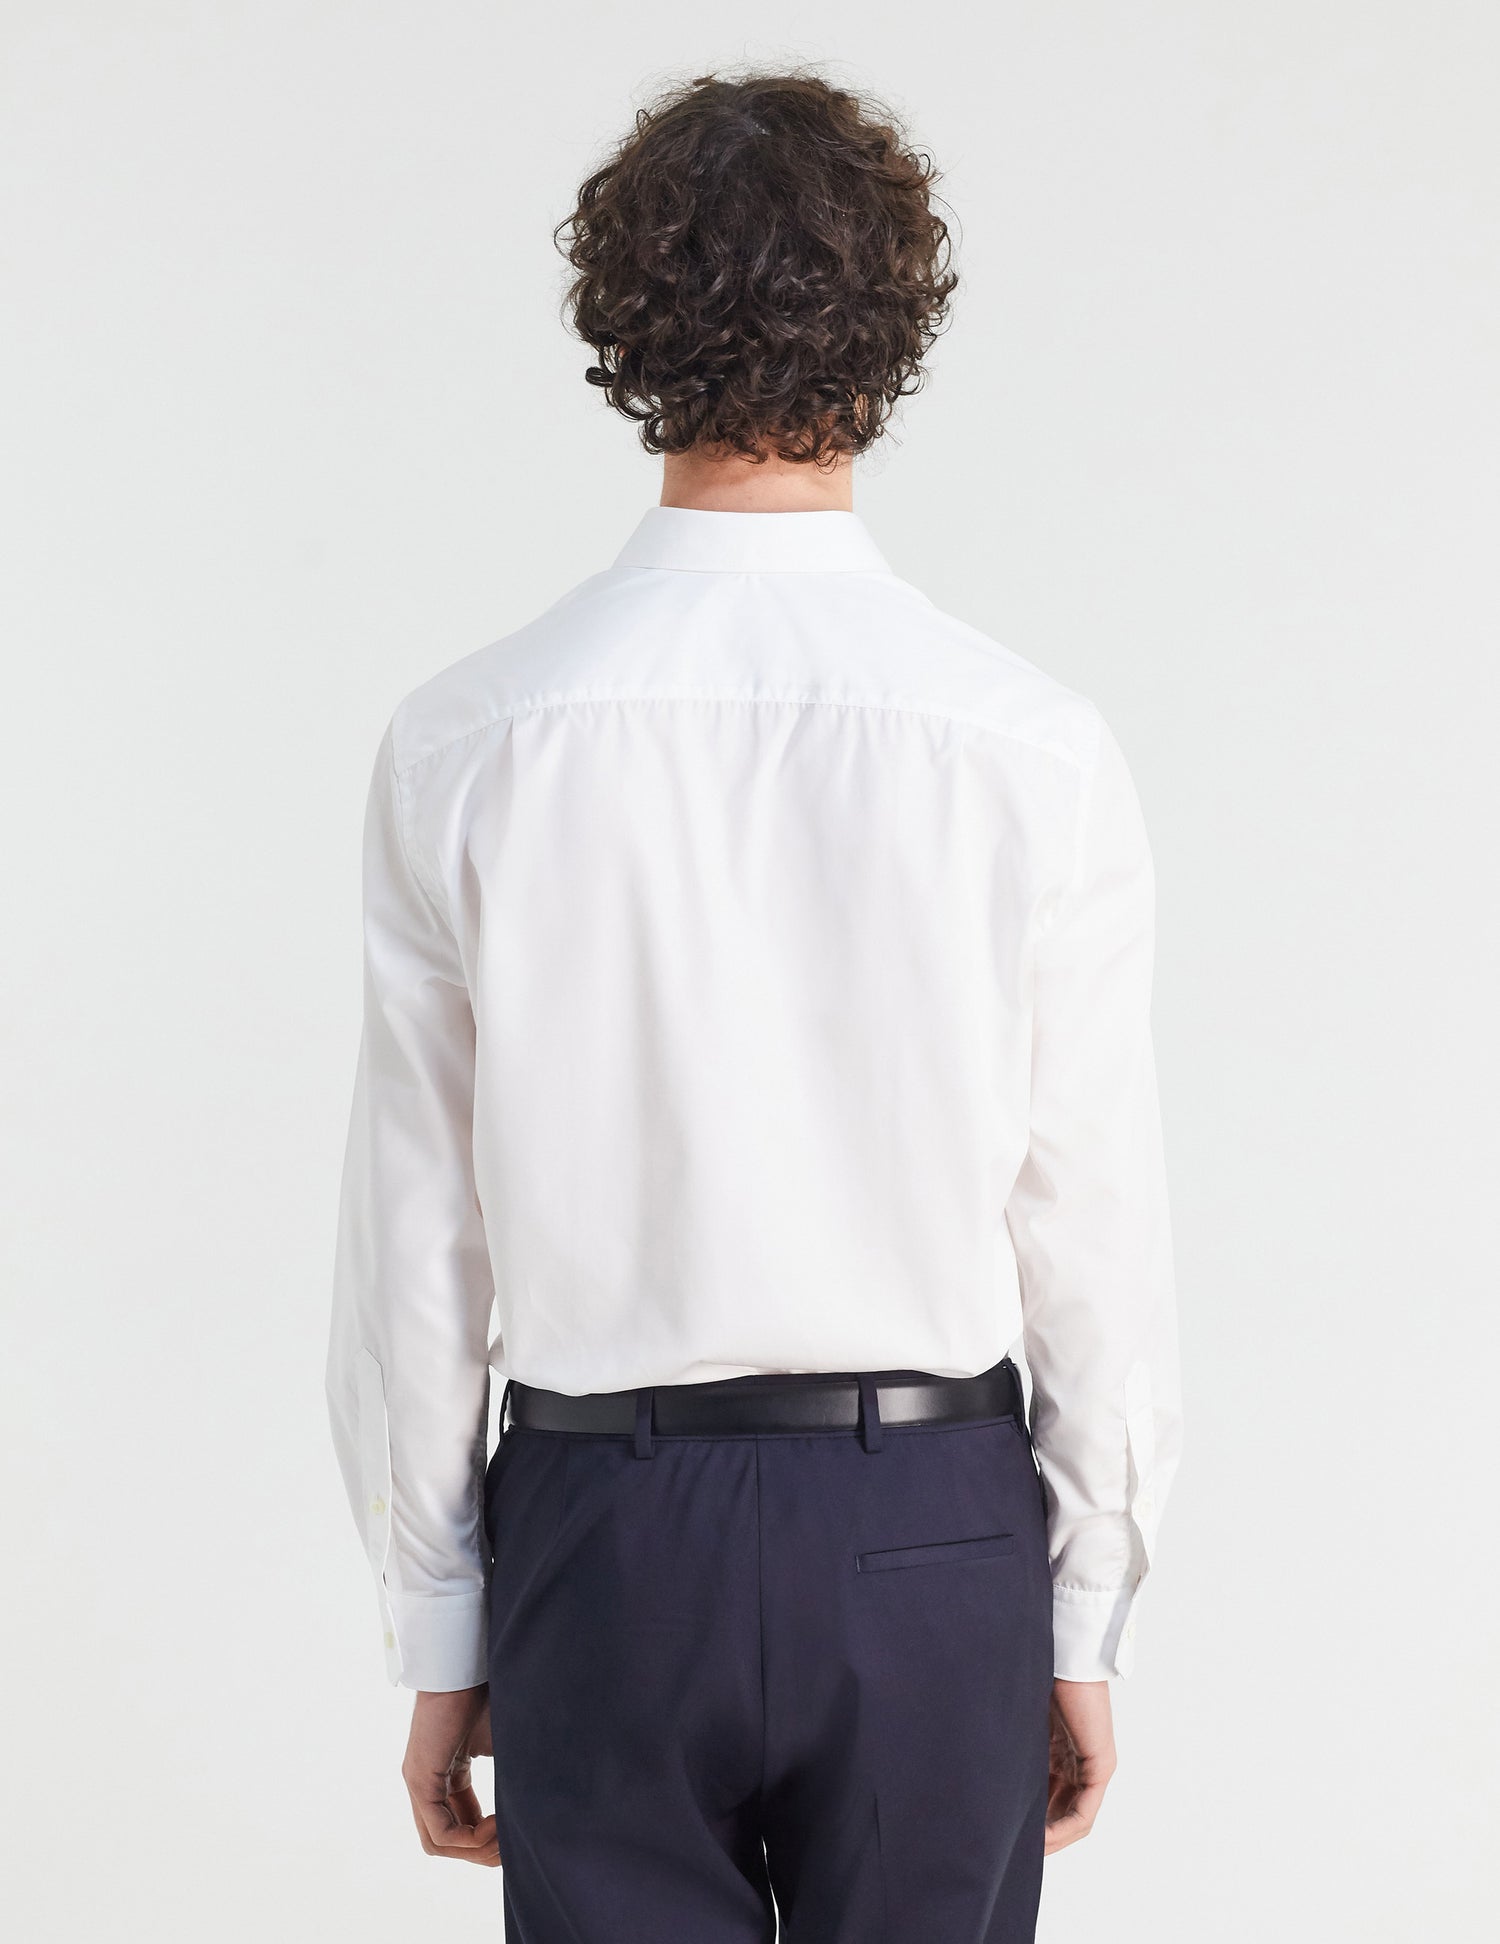 Classic white wrinkle-free Shirt - Poplin - Figaret Collar#4